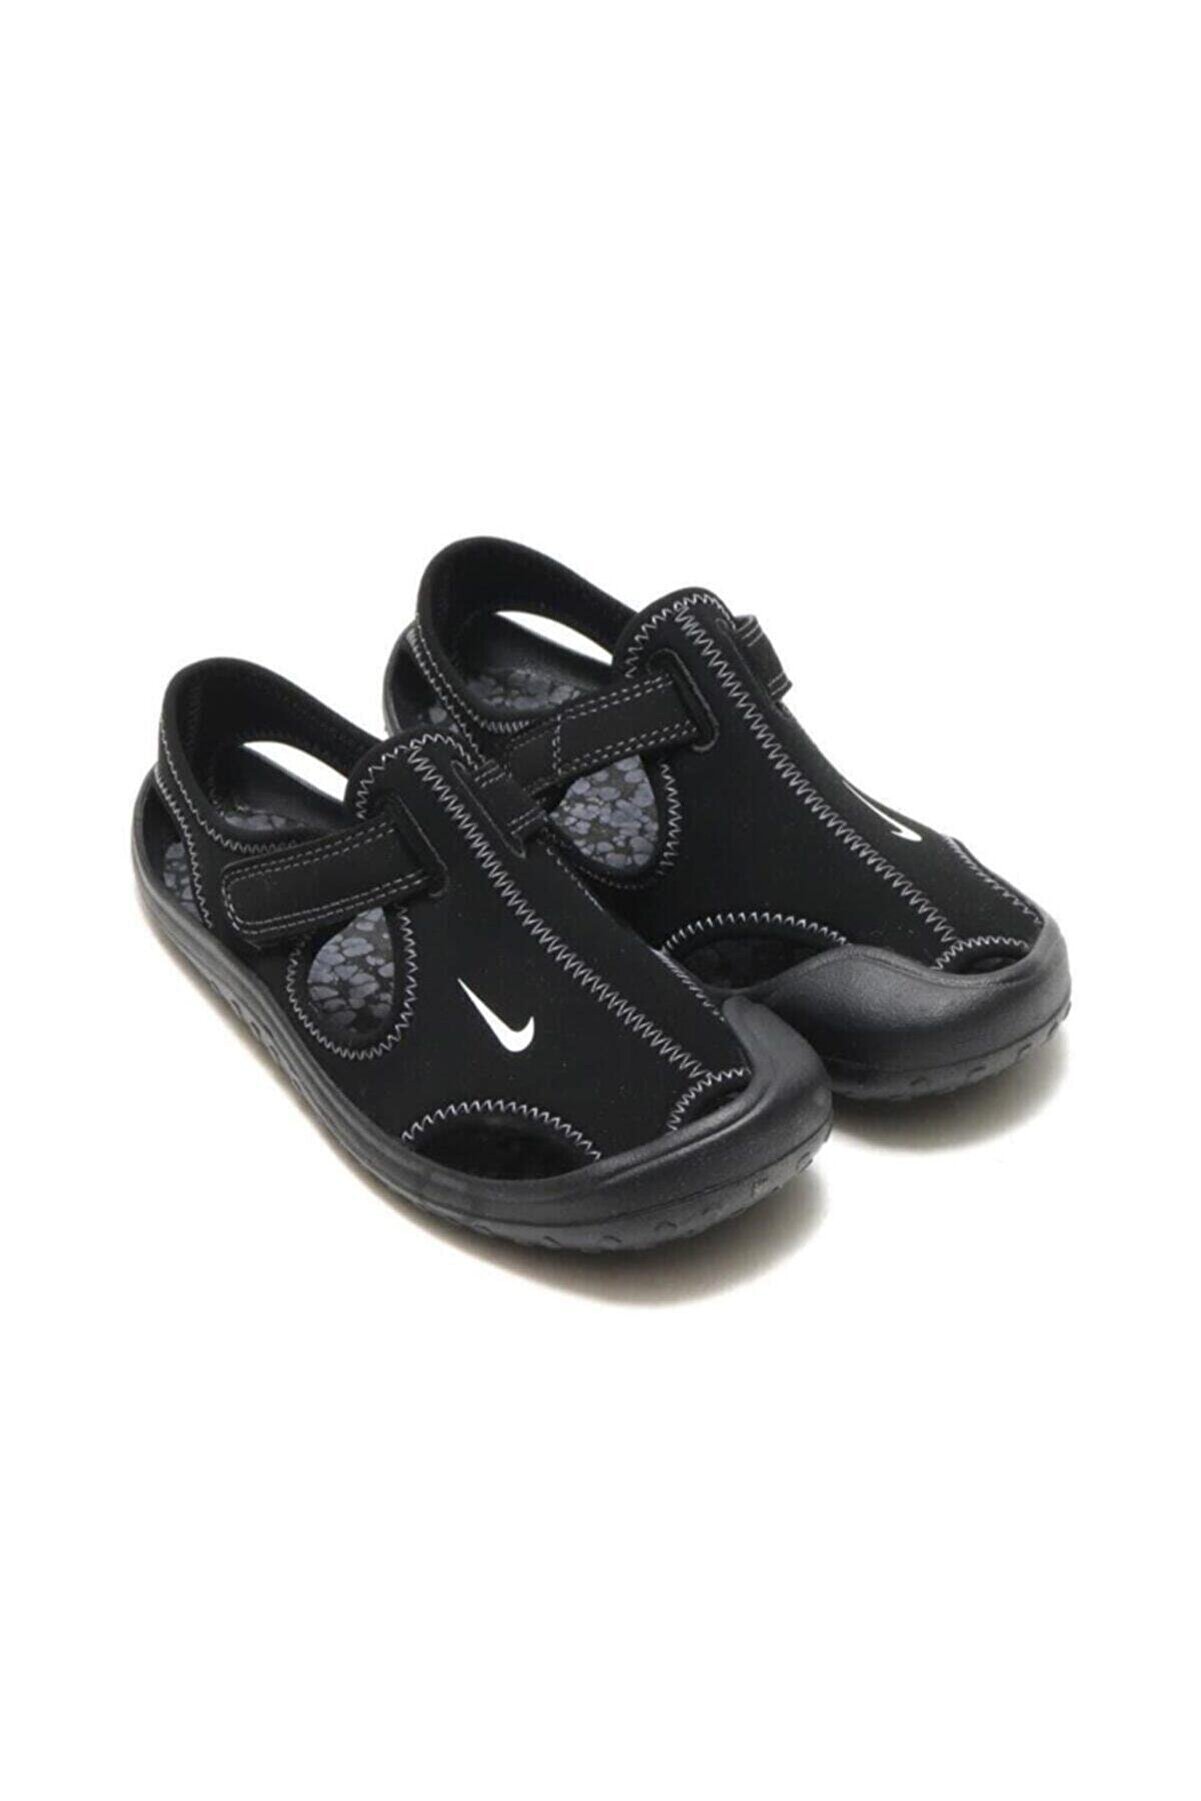 Nike Sunray Protect 903631-001 Çocuk Sandalet